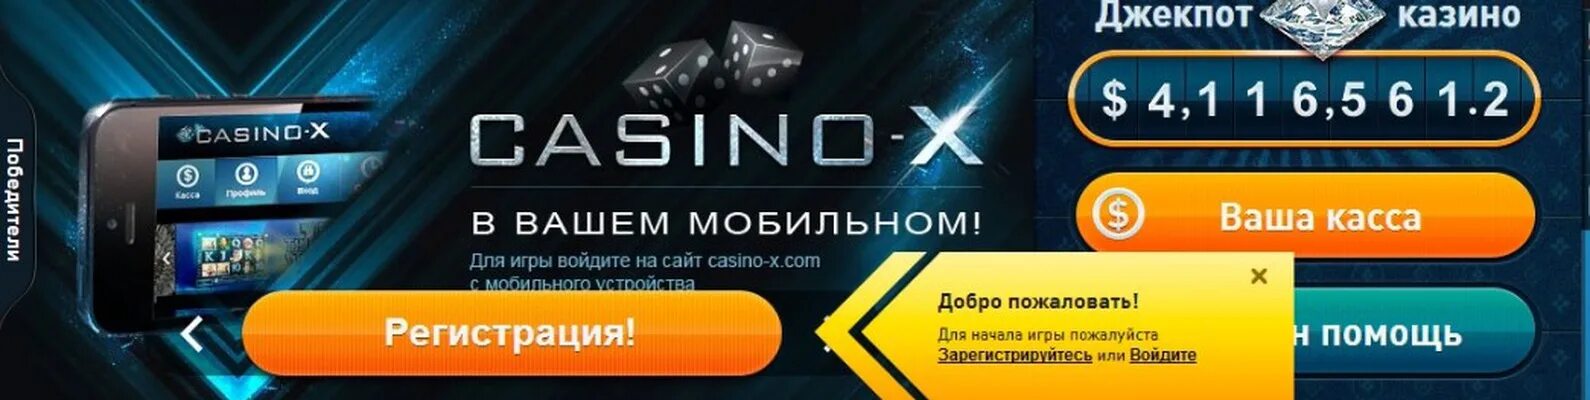 Казино х. Казино Икс Casino-x. Casino x зеркало. Casino x мобильная версия play